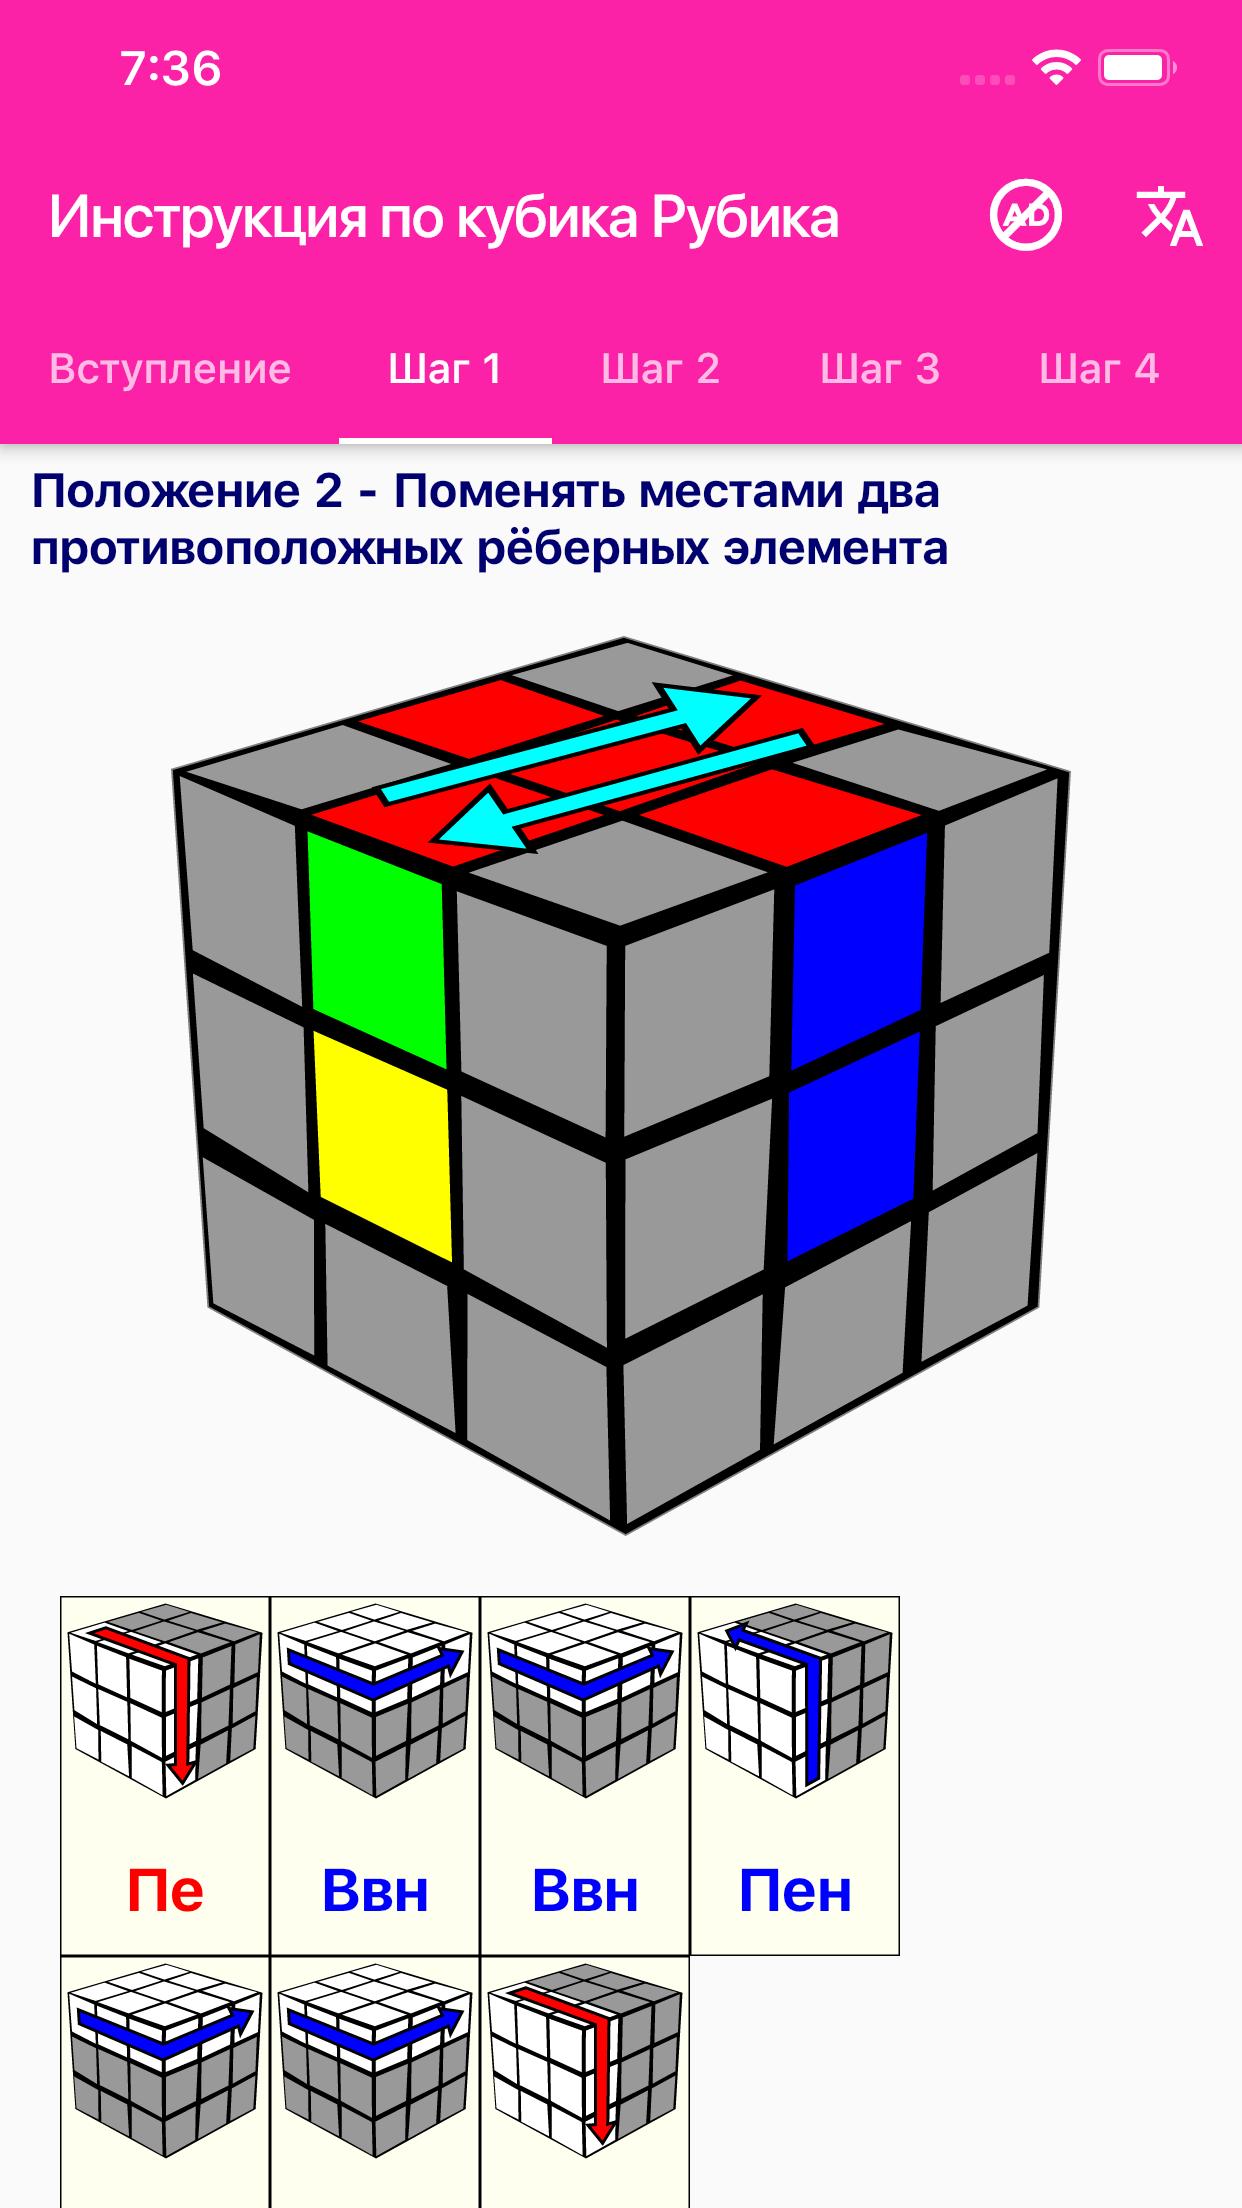 Приложение собрать кубик 3 на 3. Кубик Рубика 3 слой схема. Инструкция кубика Рубика 3 на 3. Последний слой кубика Рубика 3 на3. Схема сборки кубика Рубика 3 на 3.